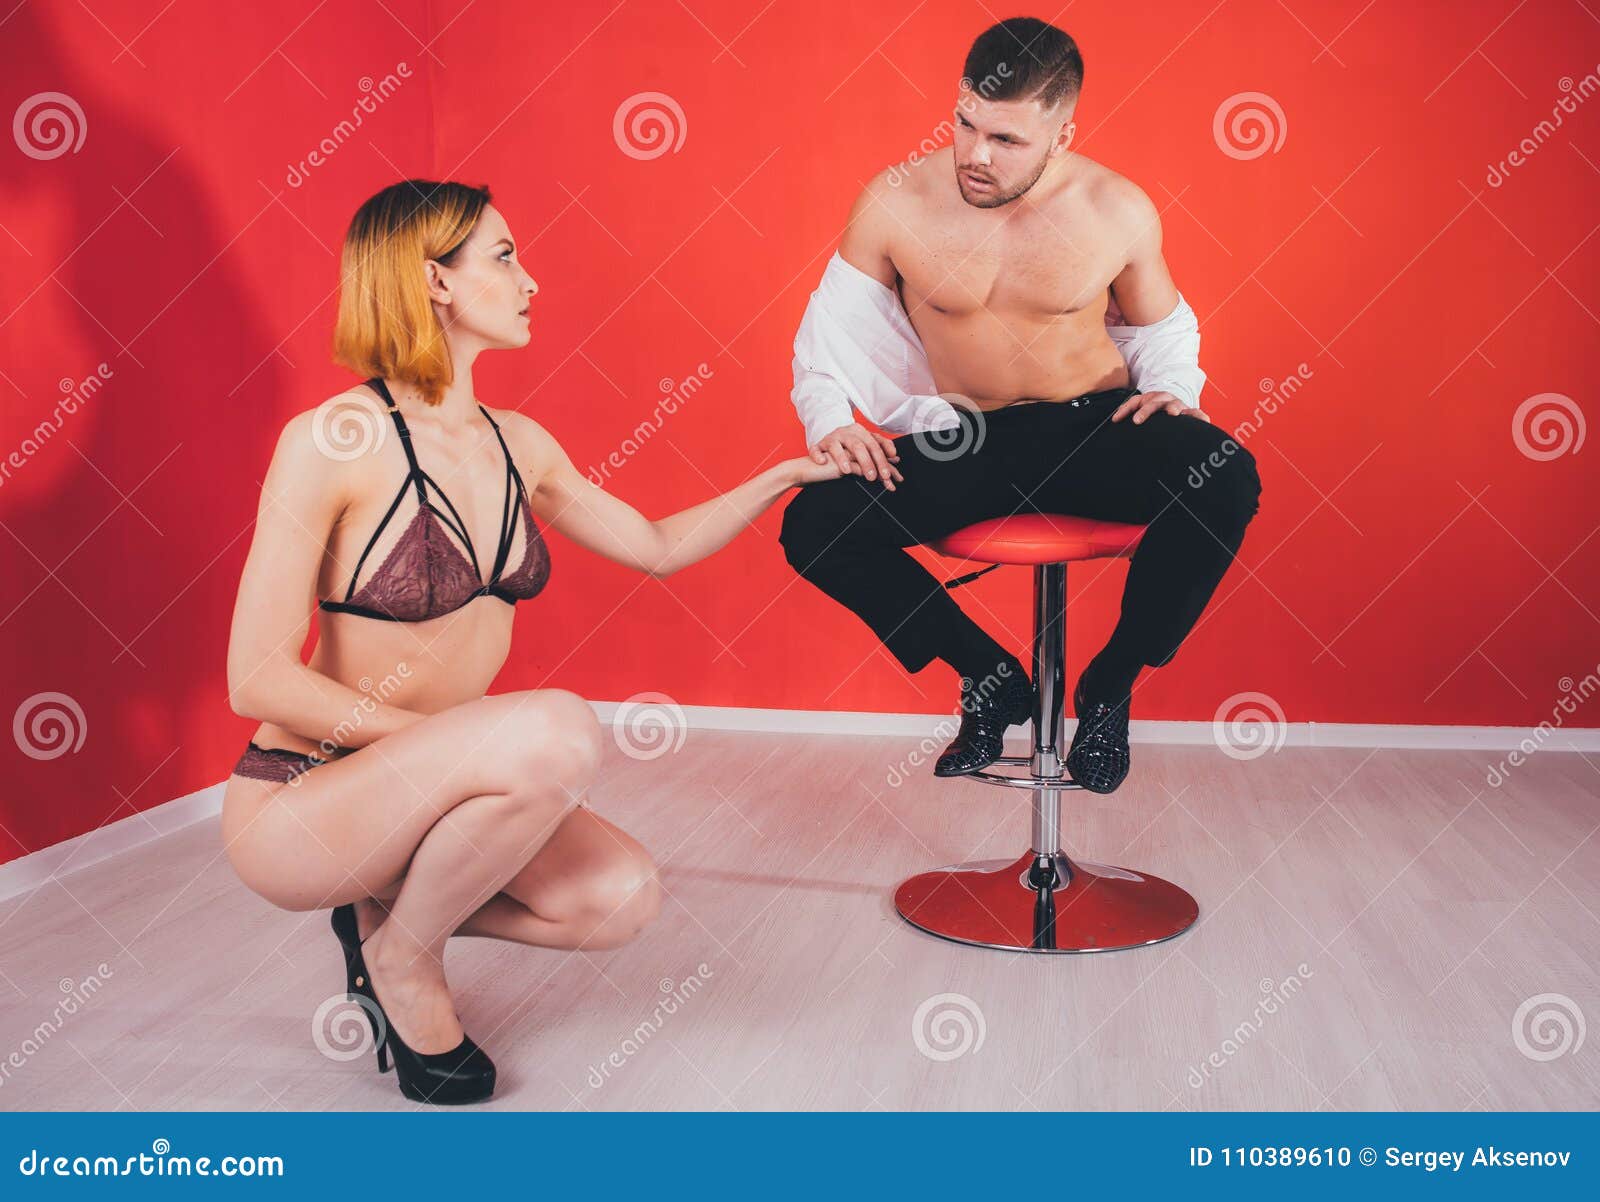 Sexy Women Seducing Men